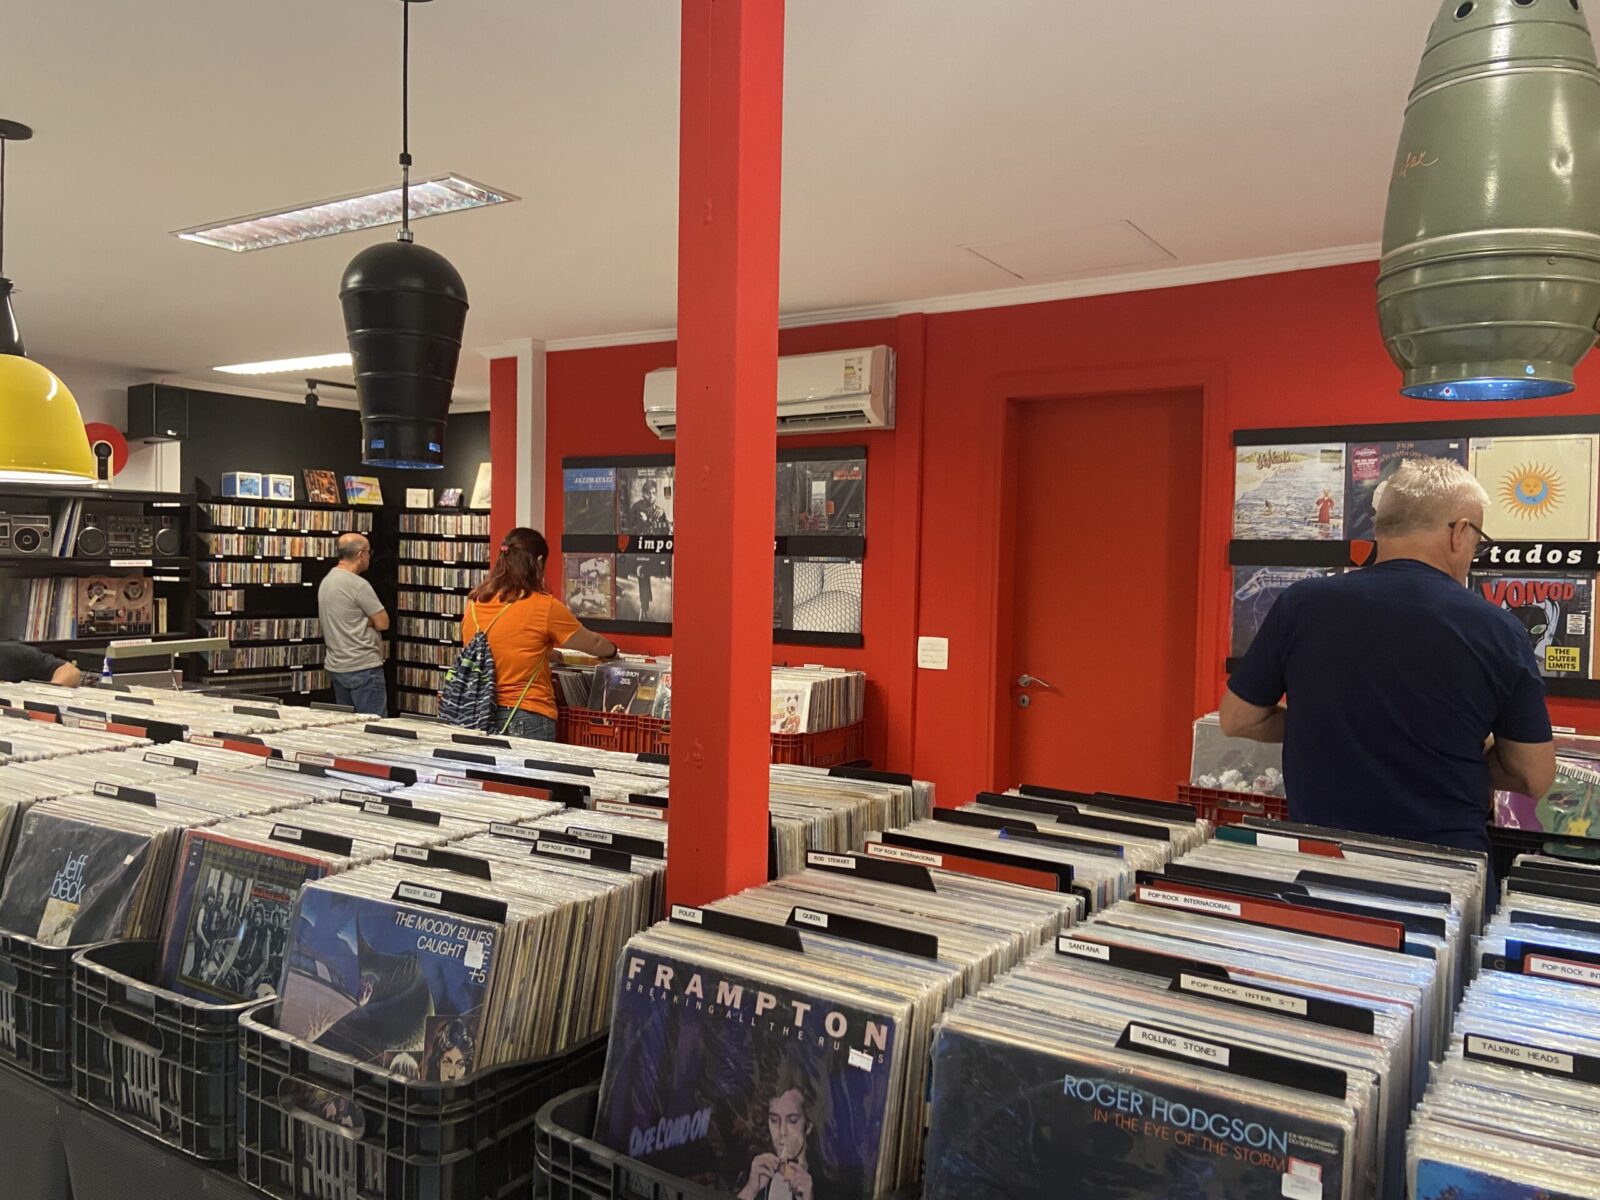 Venda de discos de vinil cresce 100% e movimenta comércio de Curitiba